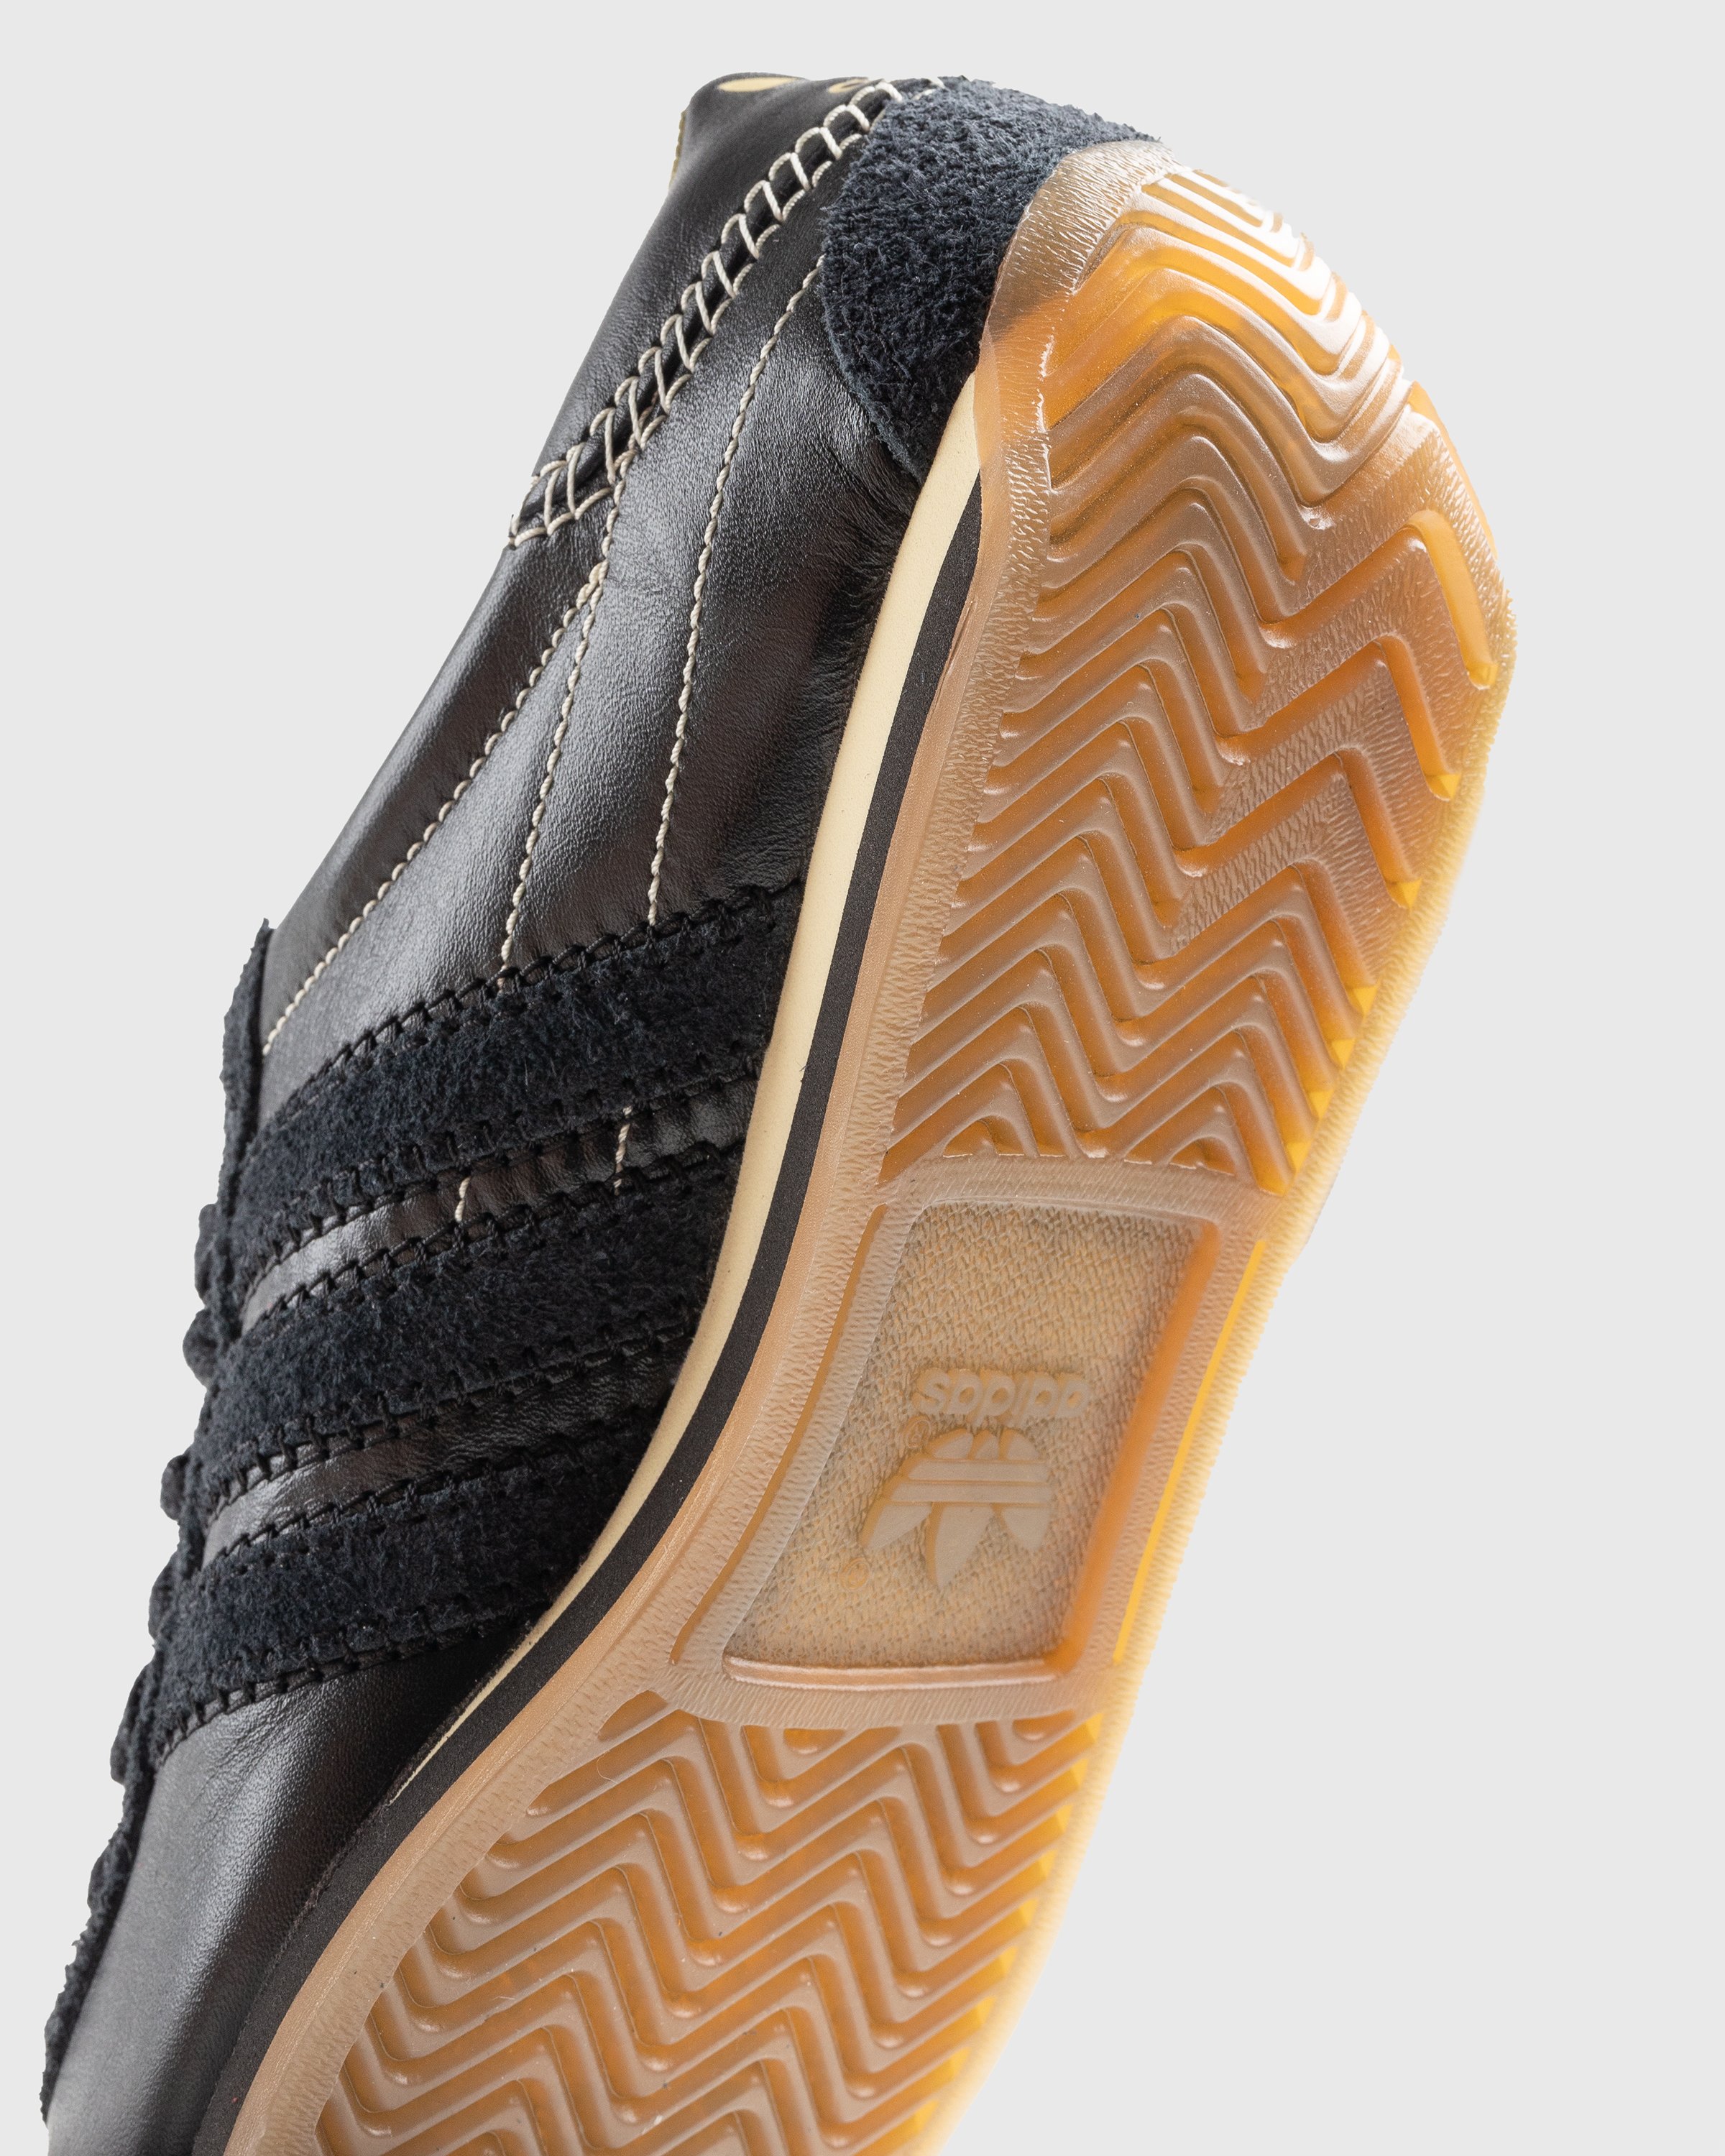 Adidas x Wales Bonner - WB Country Core Black/Core Black/Easy Yellow - Footwear - Black - Image 6